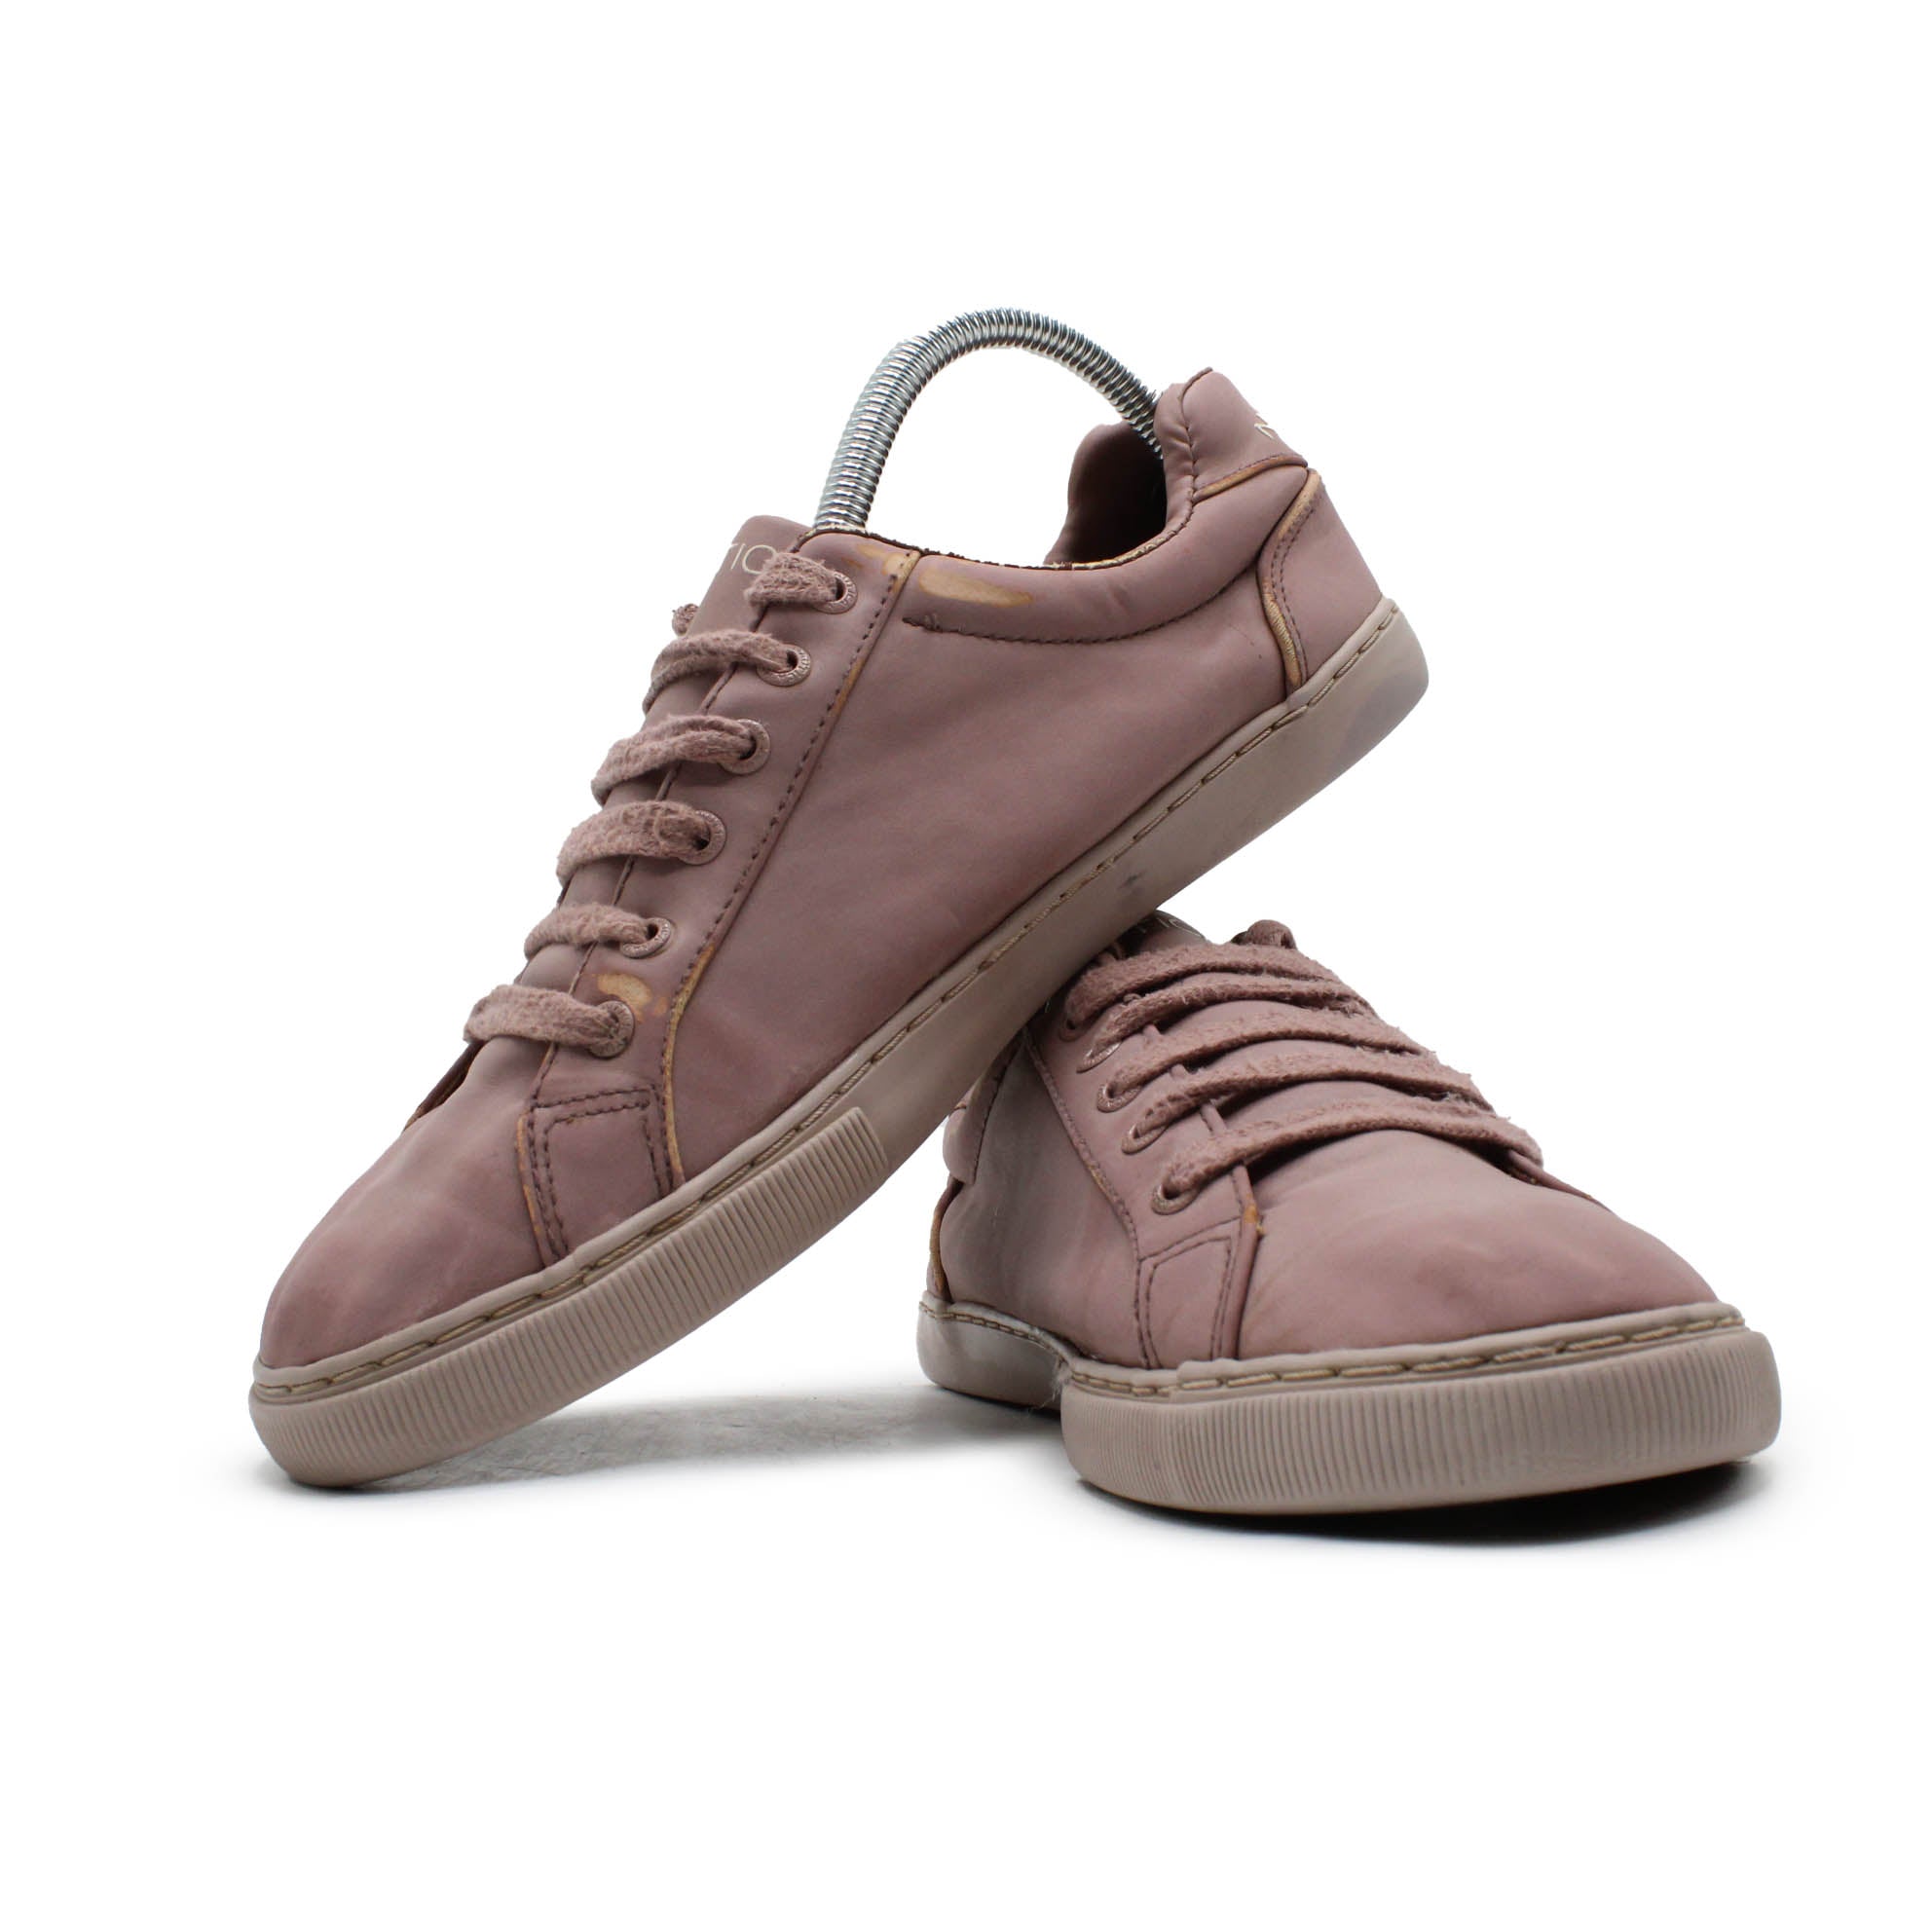 Nautica | Shoes | Nautica Steam Girls Dk Blush Tonal Perforated Laceup  Sneakers Size 2 | Poshmark